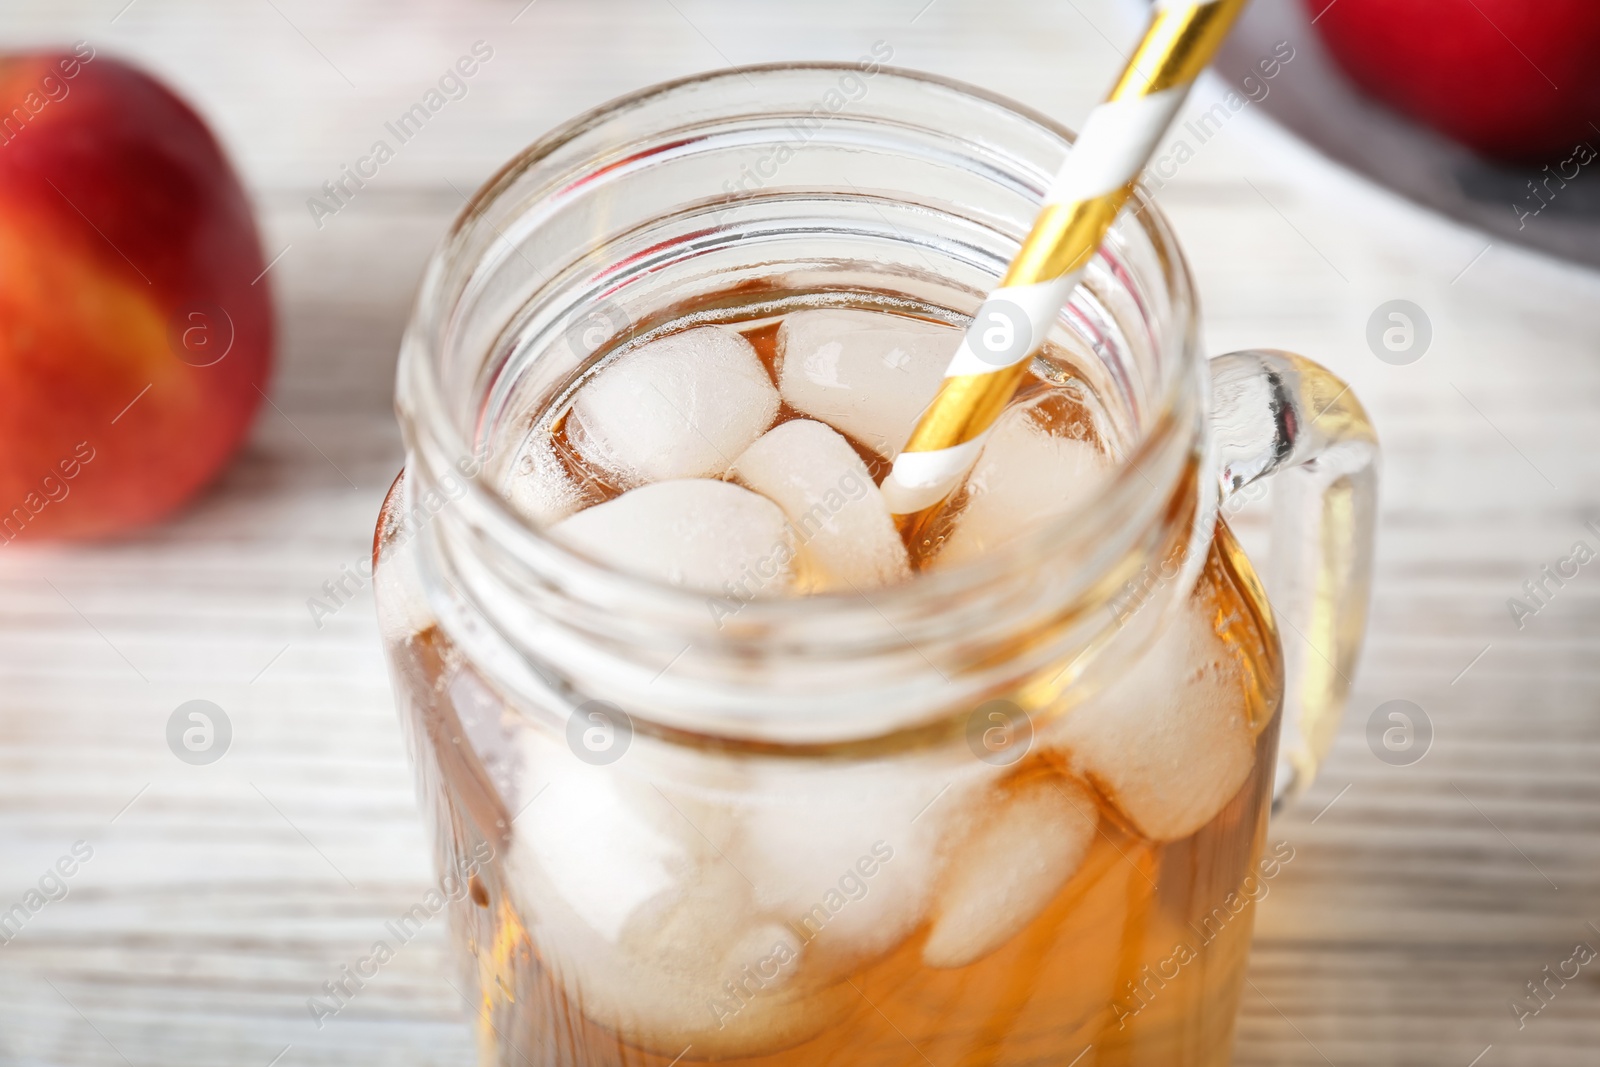 Photo of Mason jar with fresh apple juice on wooden table, closeup